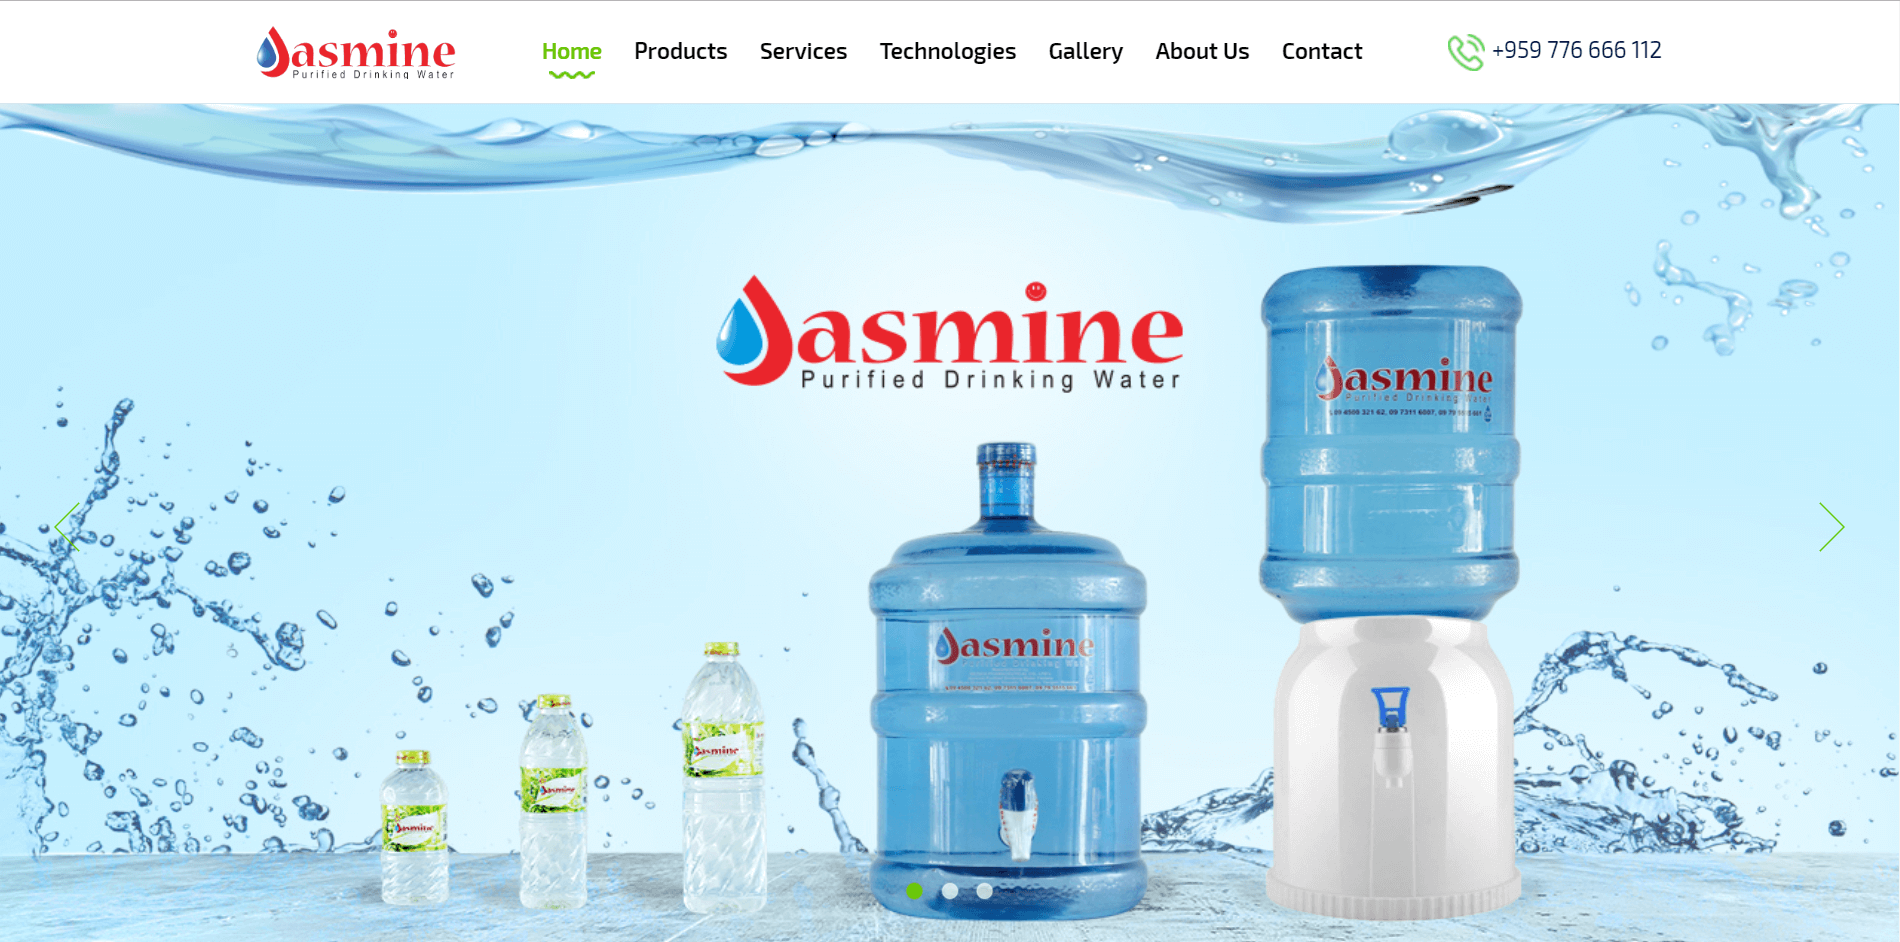 Jasmine Purified Drinking Water - CMS Website